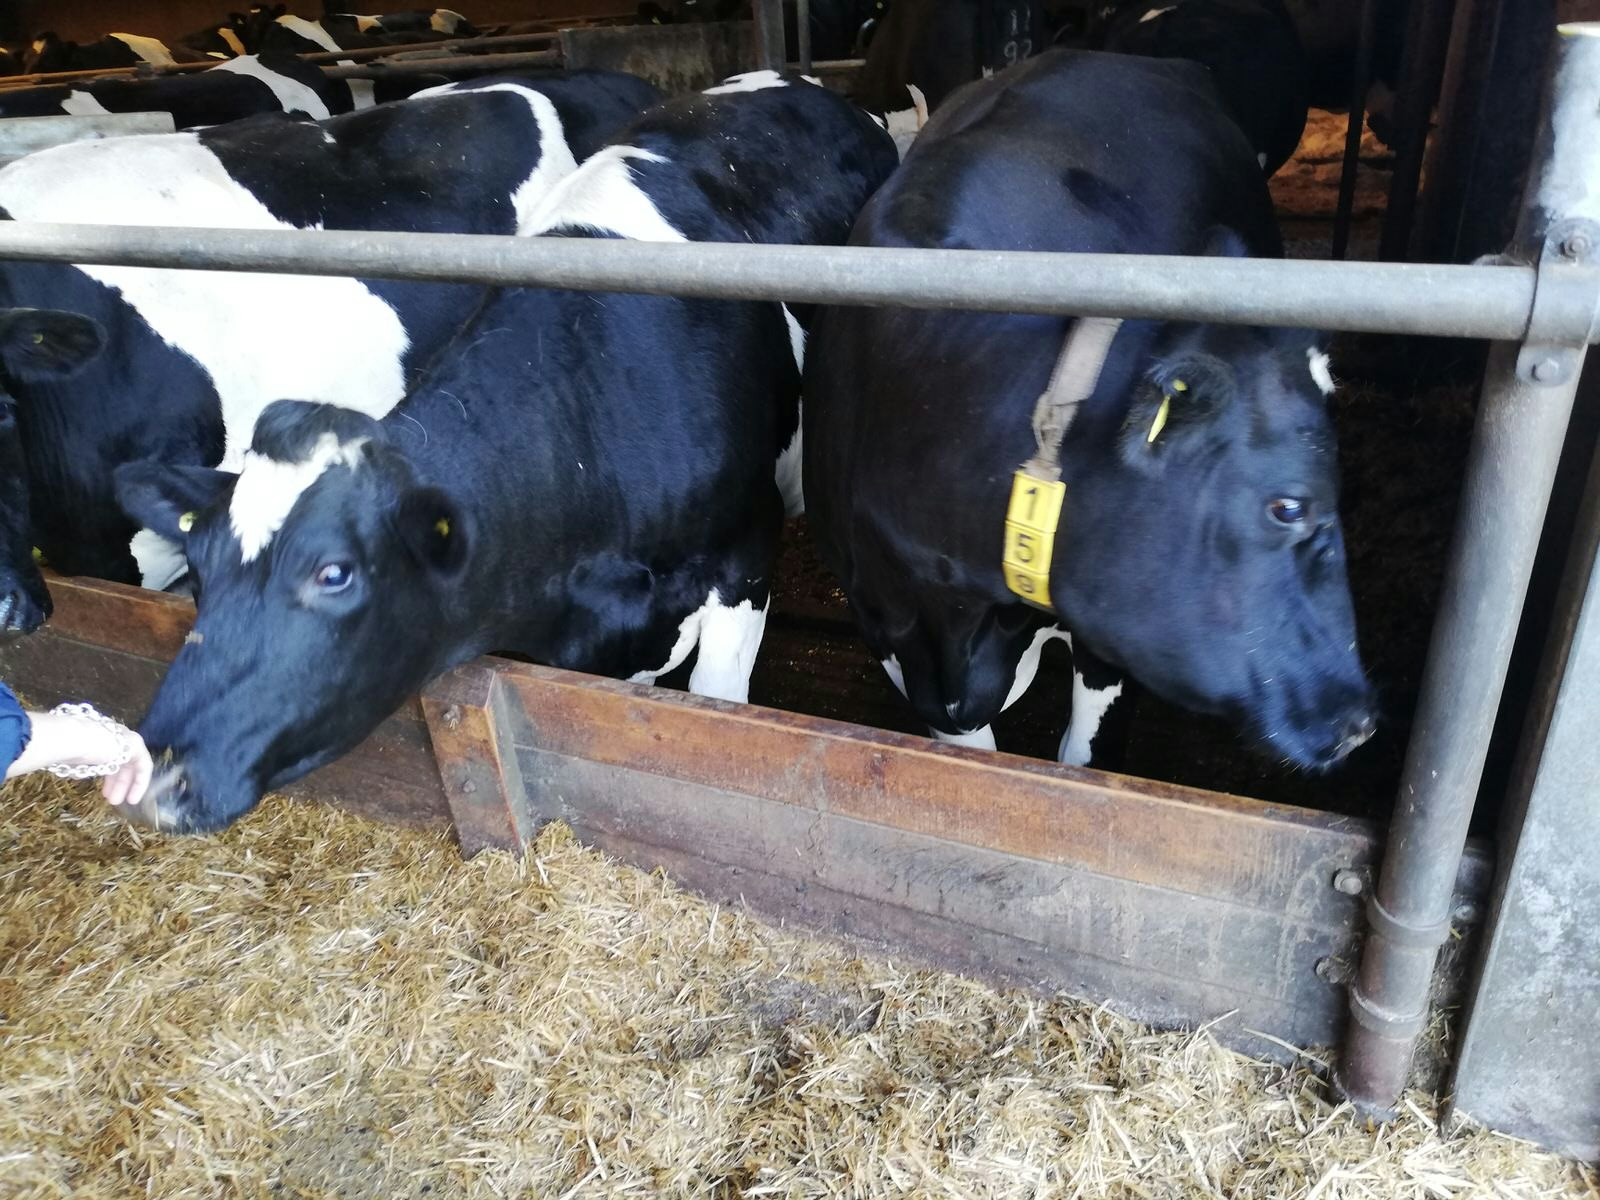 A few Fresian dairy cows in a barn on Yeo Valley farm at a hay trough